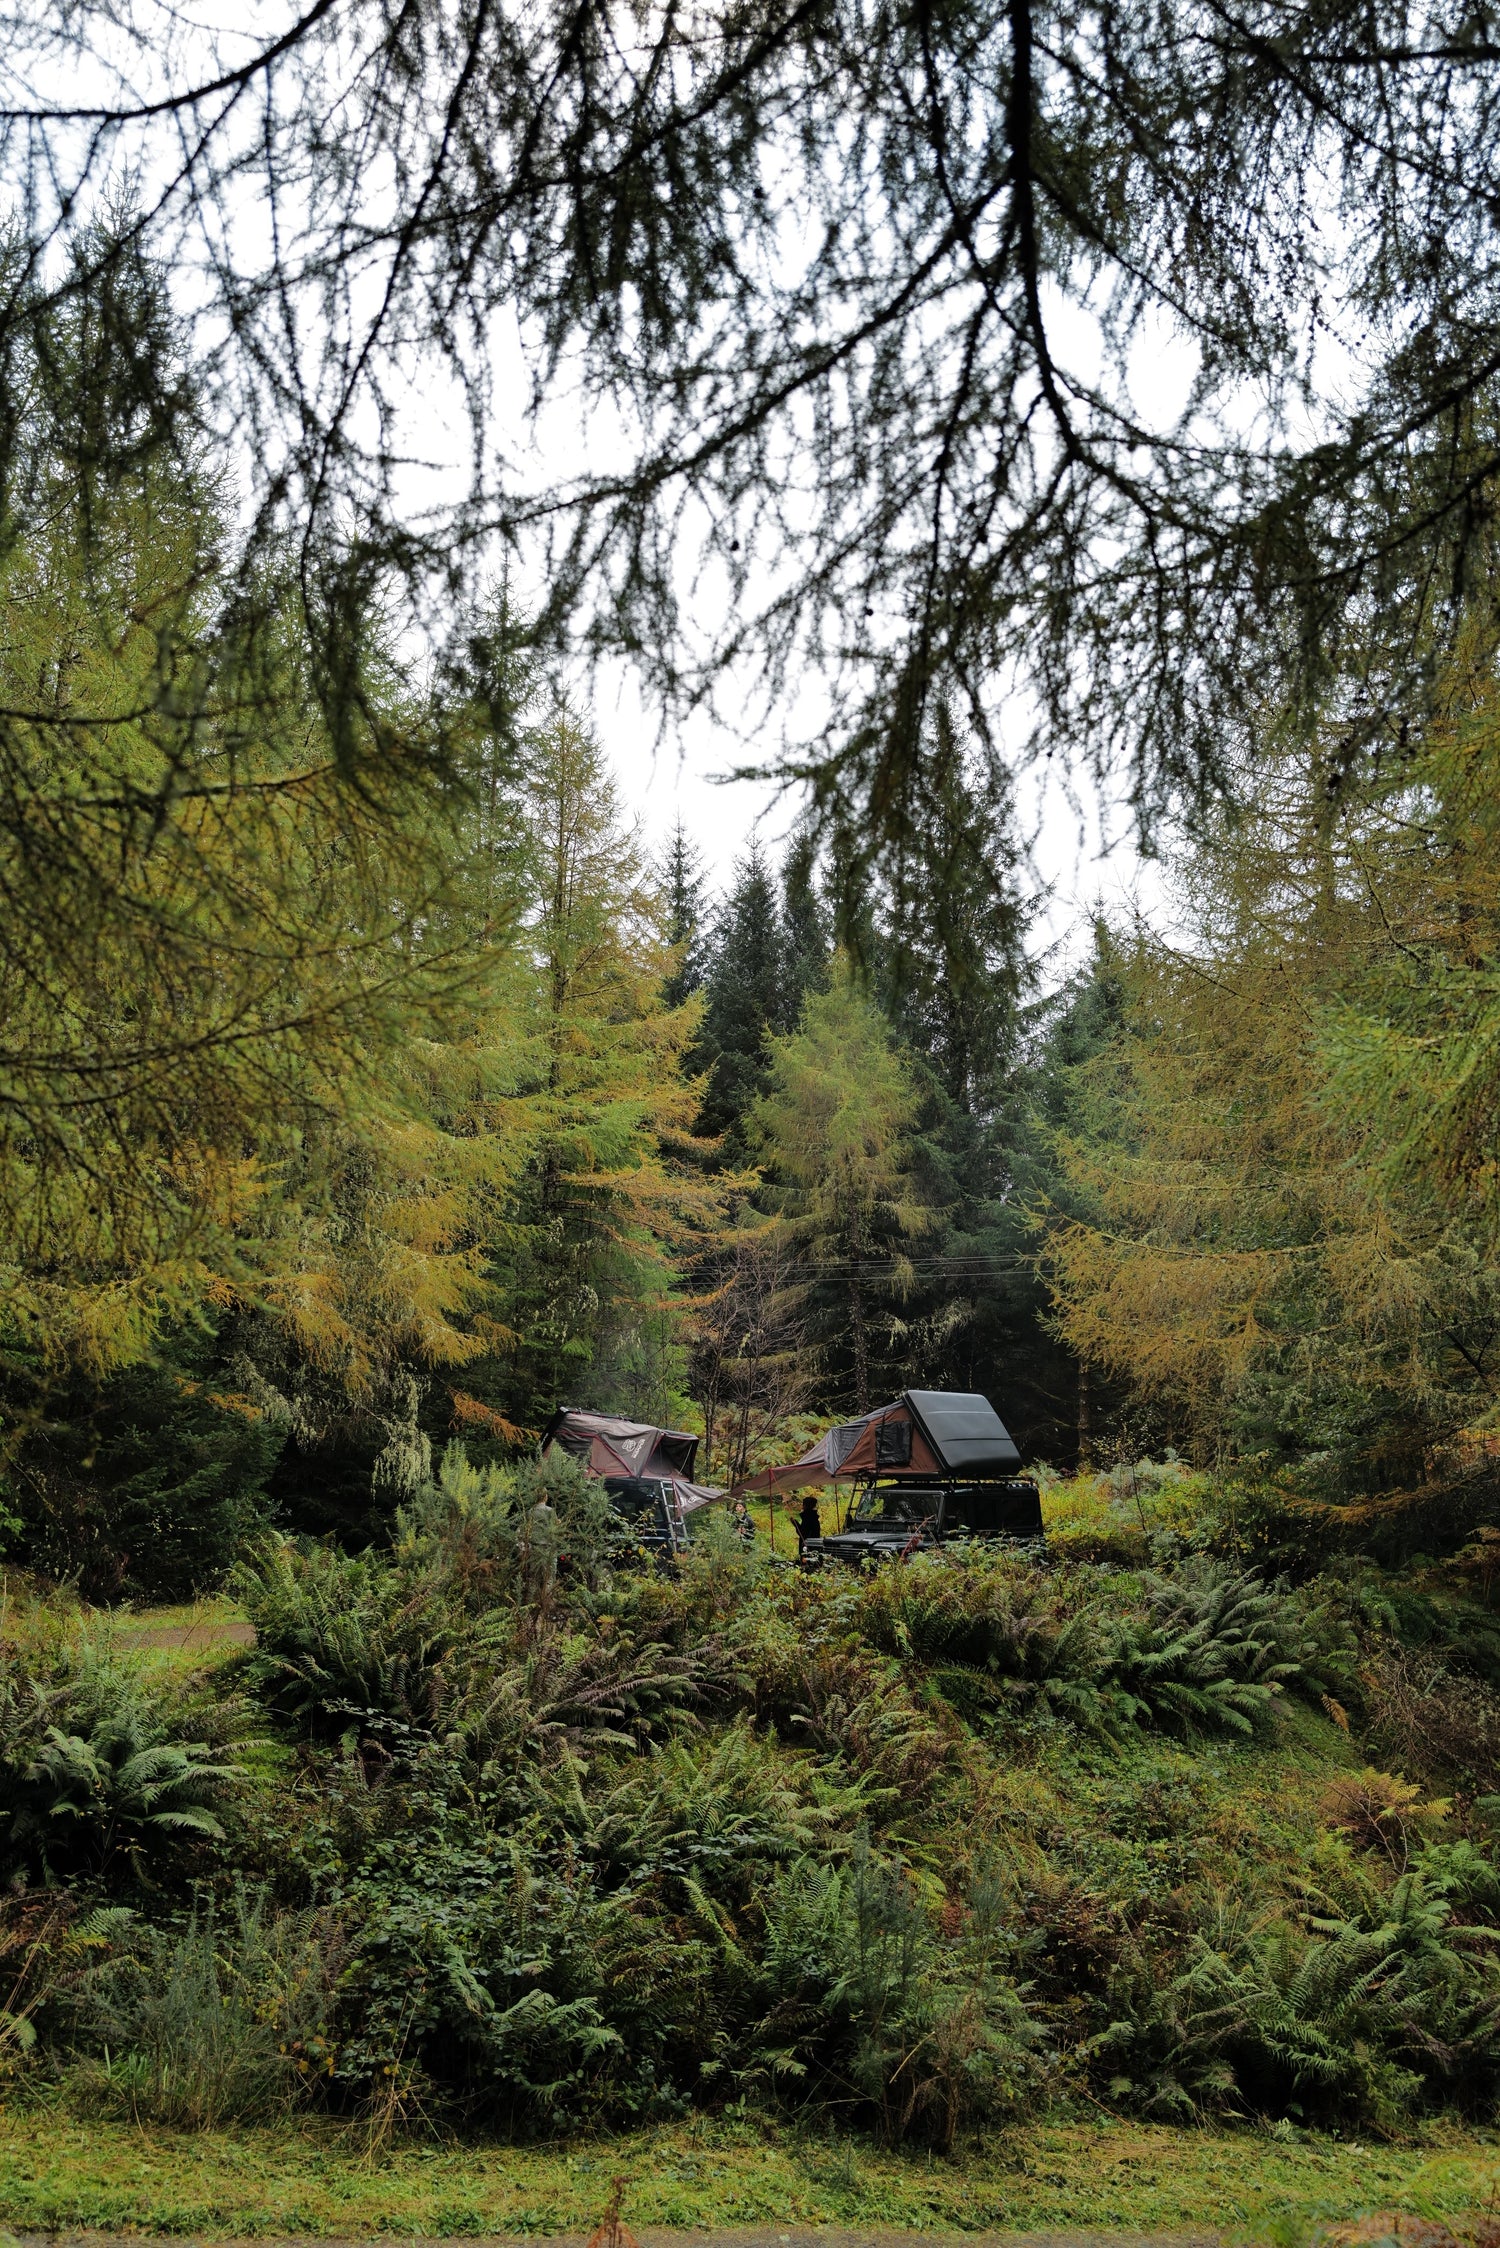 Camping in October, Scotland